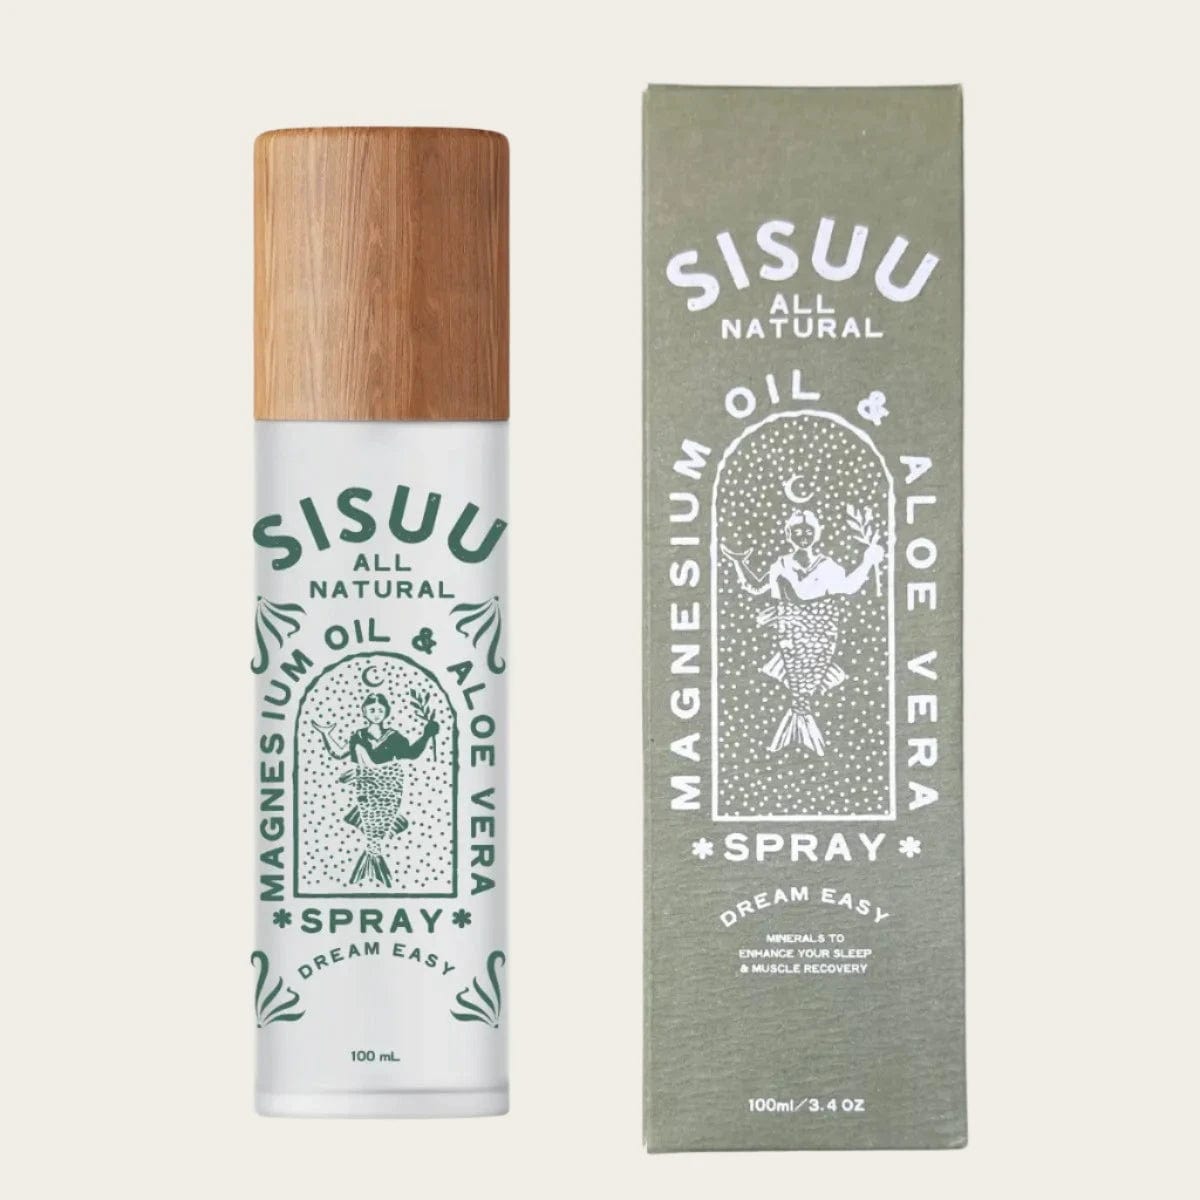 Sissu Bath & Body Magnesium Oil & Aloe Vera Spray sunja link - canada